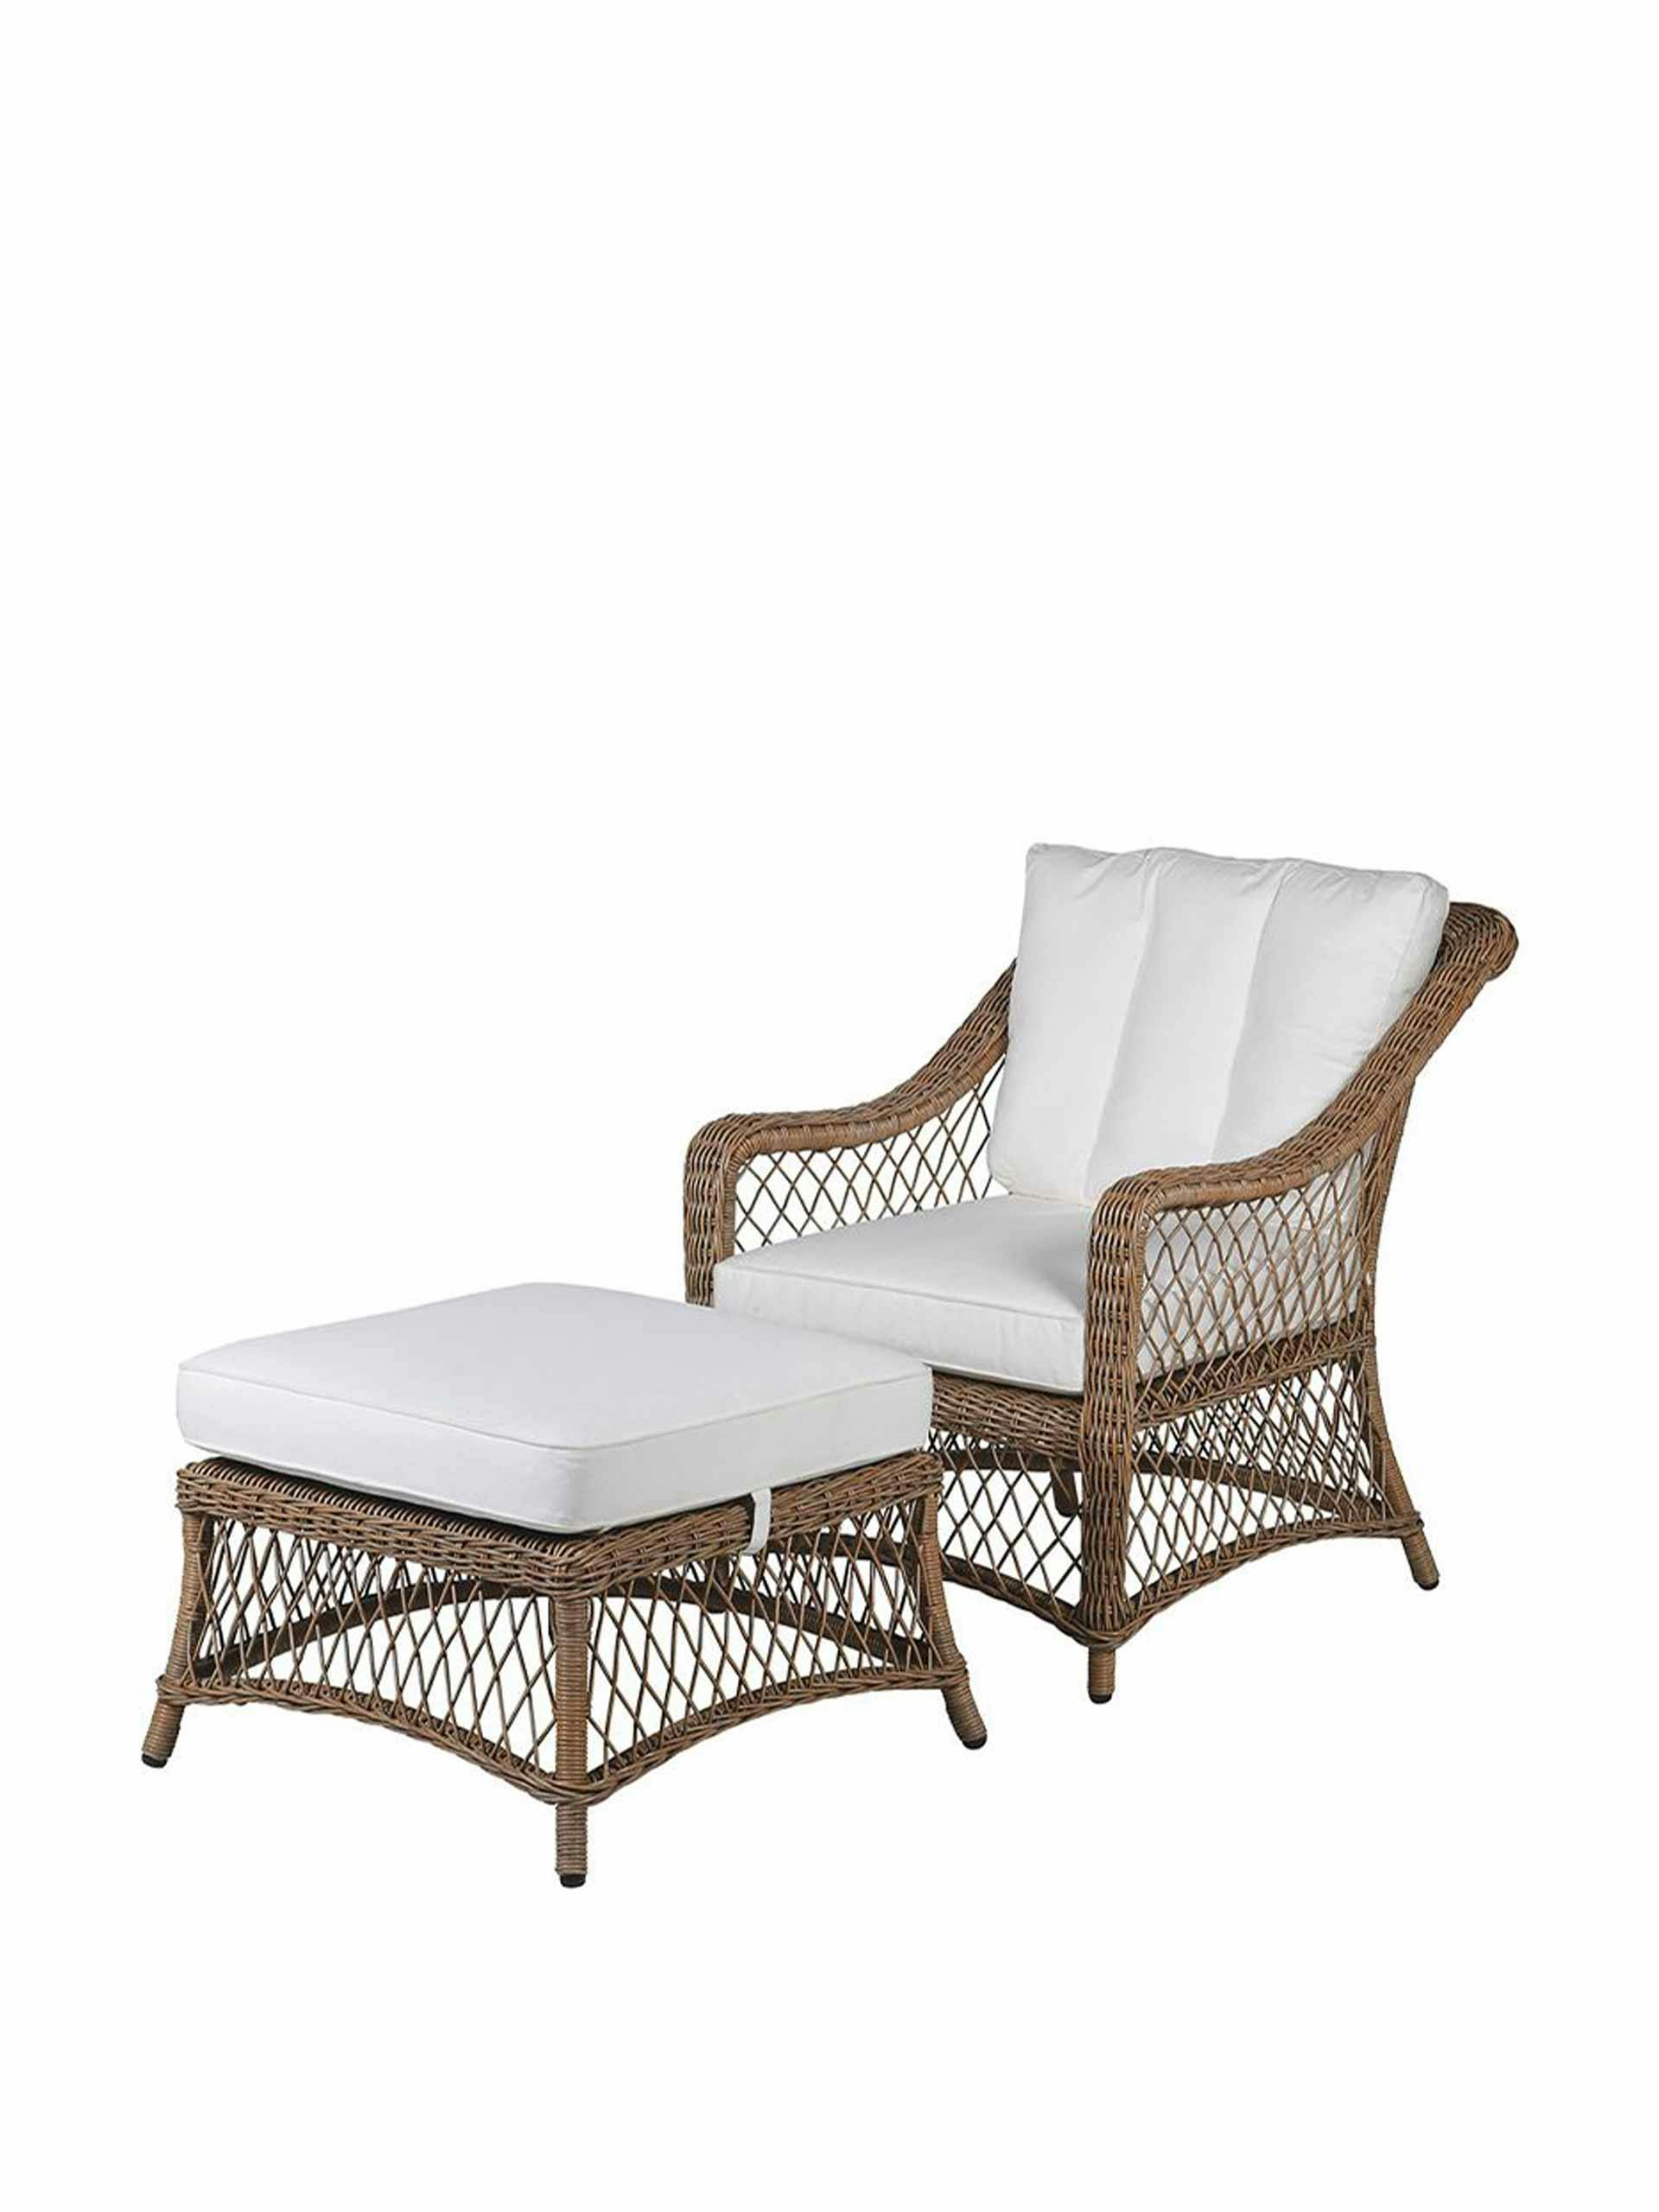 Outdoor chair and footstool garden set